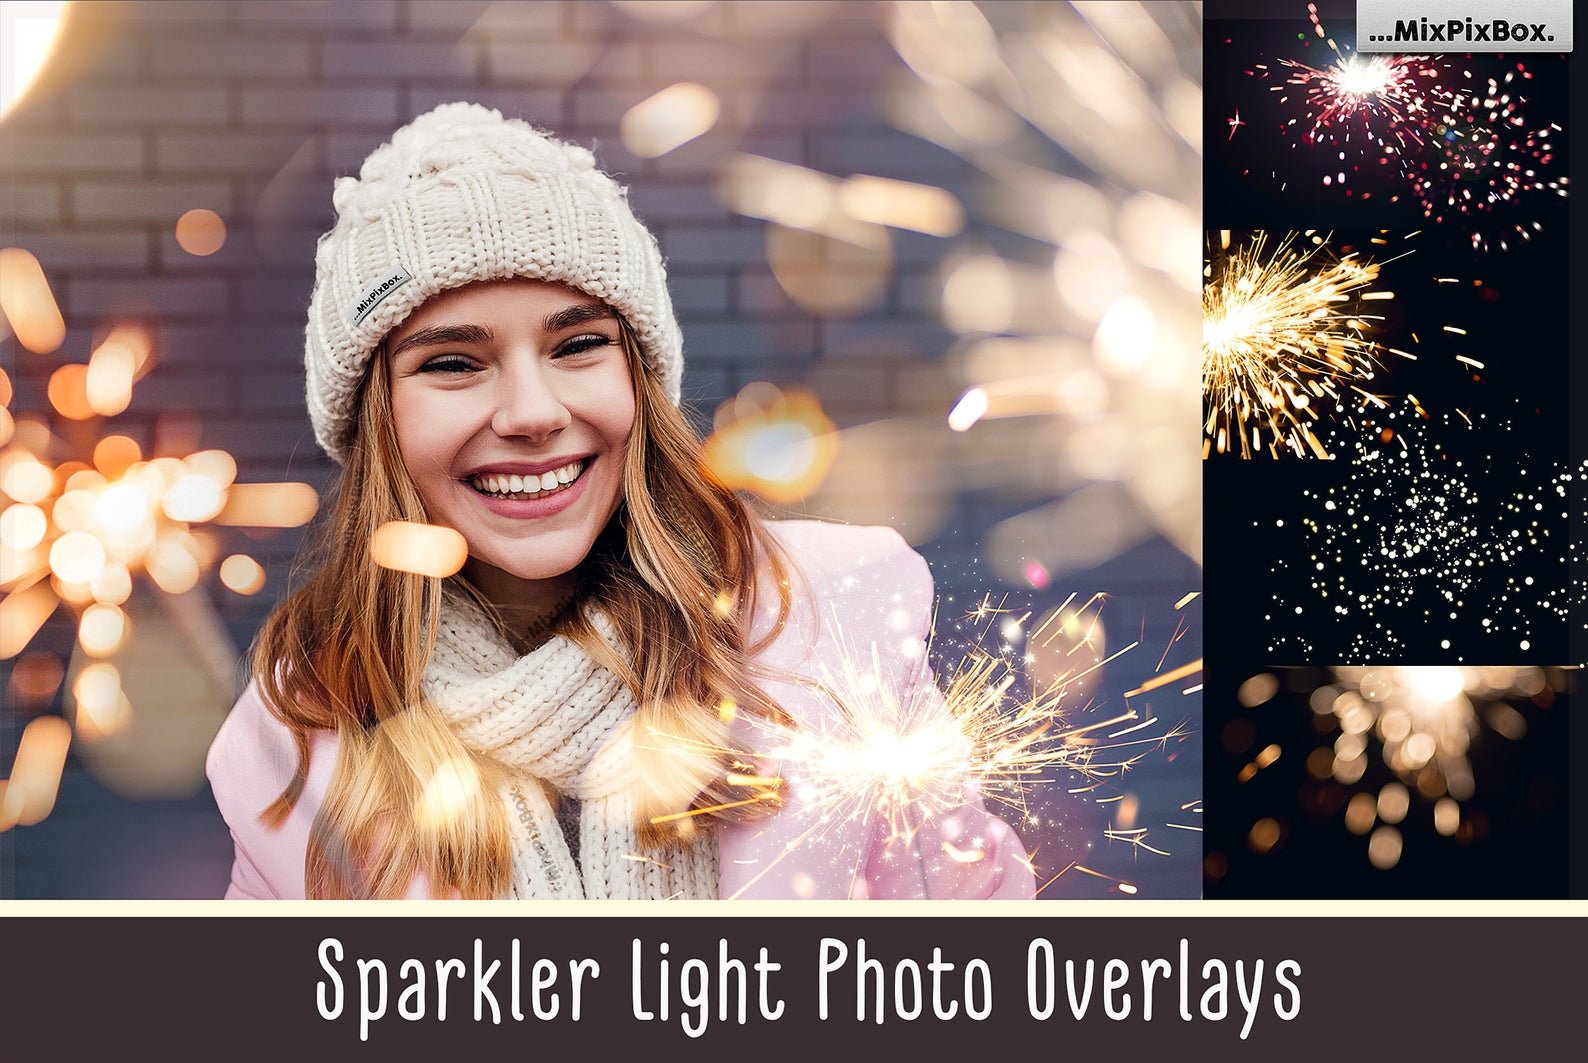 Sparkler Light Photo Overlayscover image.